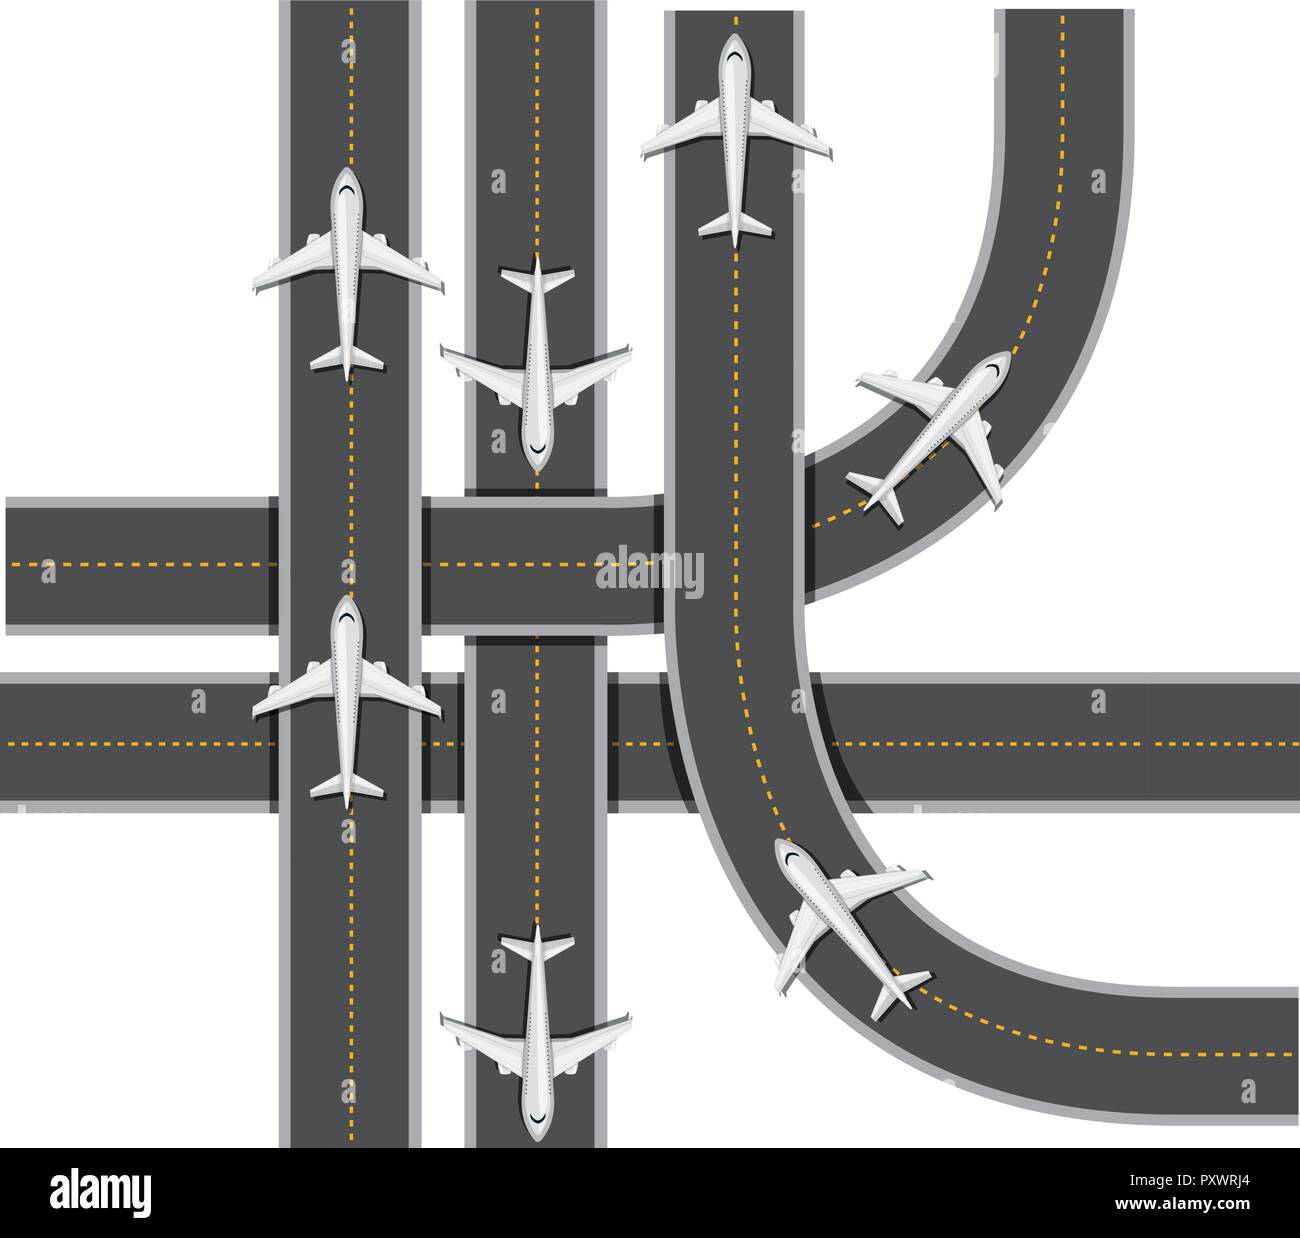 Plane Traffic on Runway on White Background illustration Stock Vector